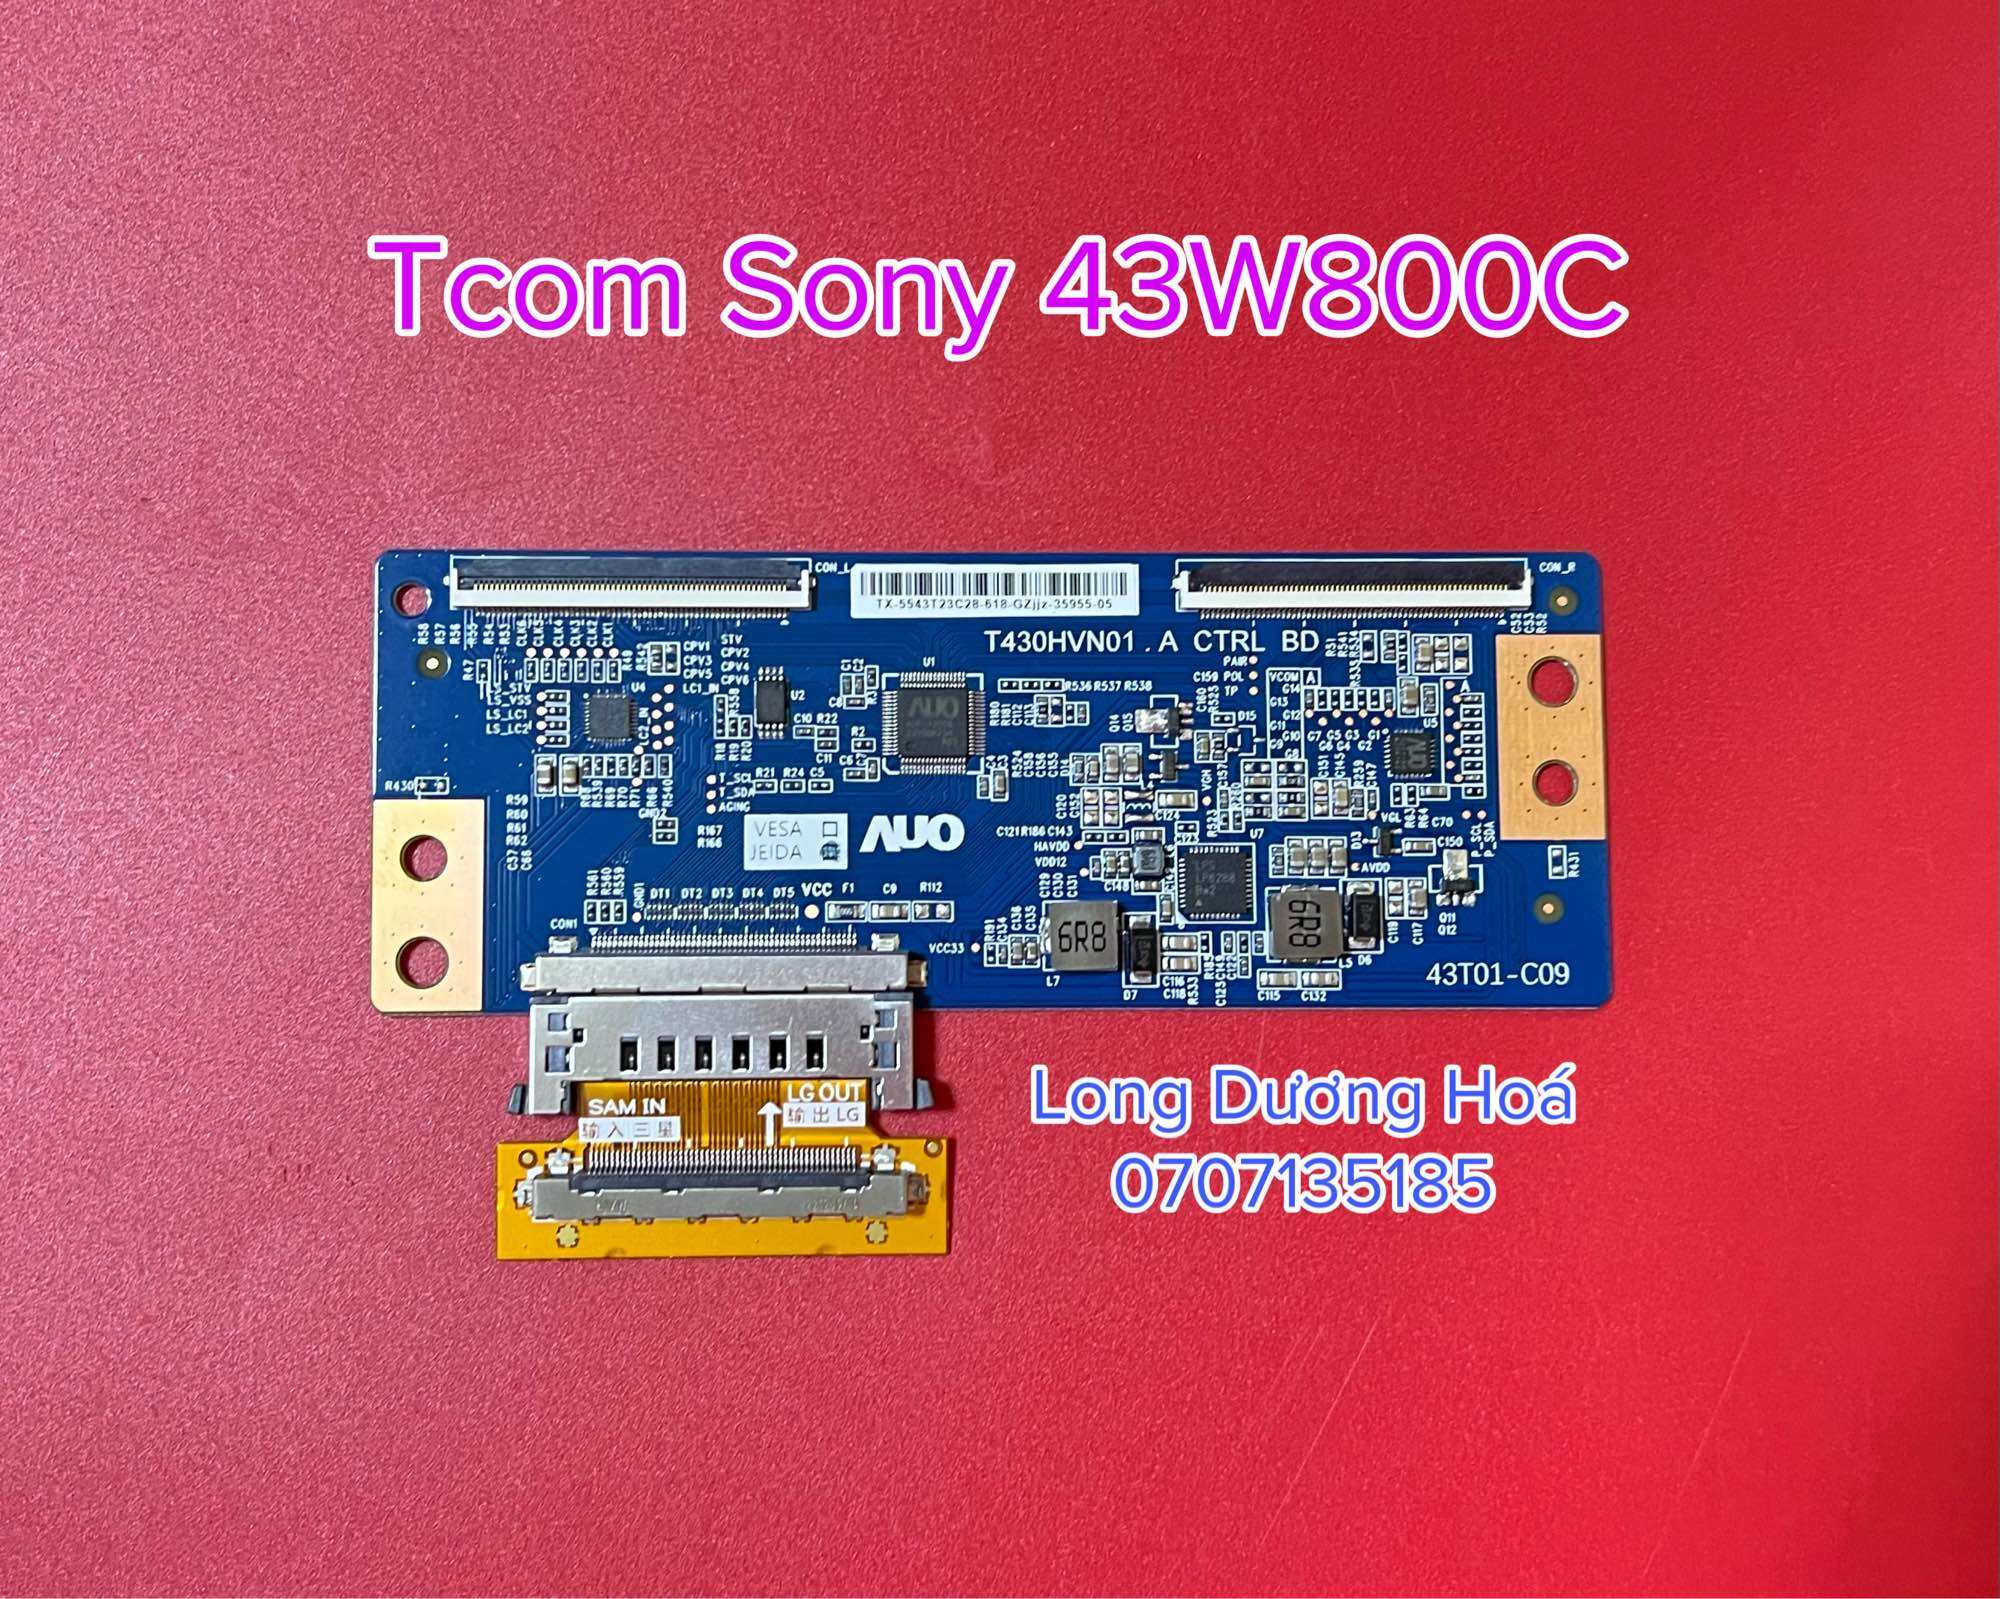 Bộ Bo Tivi Tcom 1.0 Thay Thế Cho Sony 43W800C - 50W800C